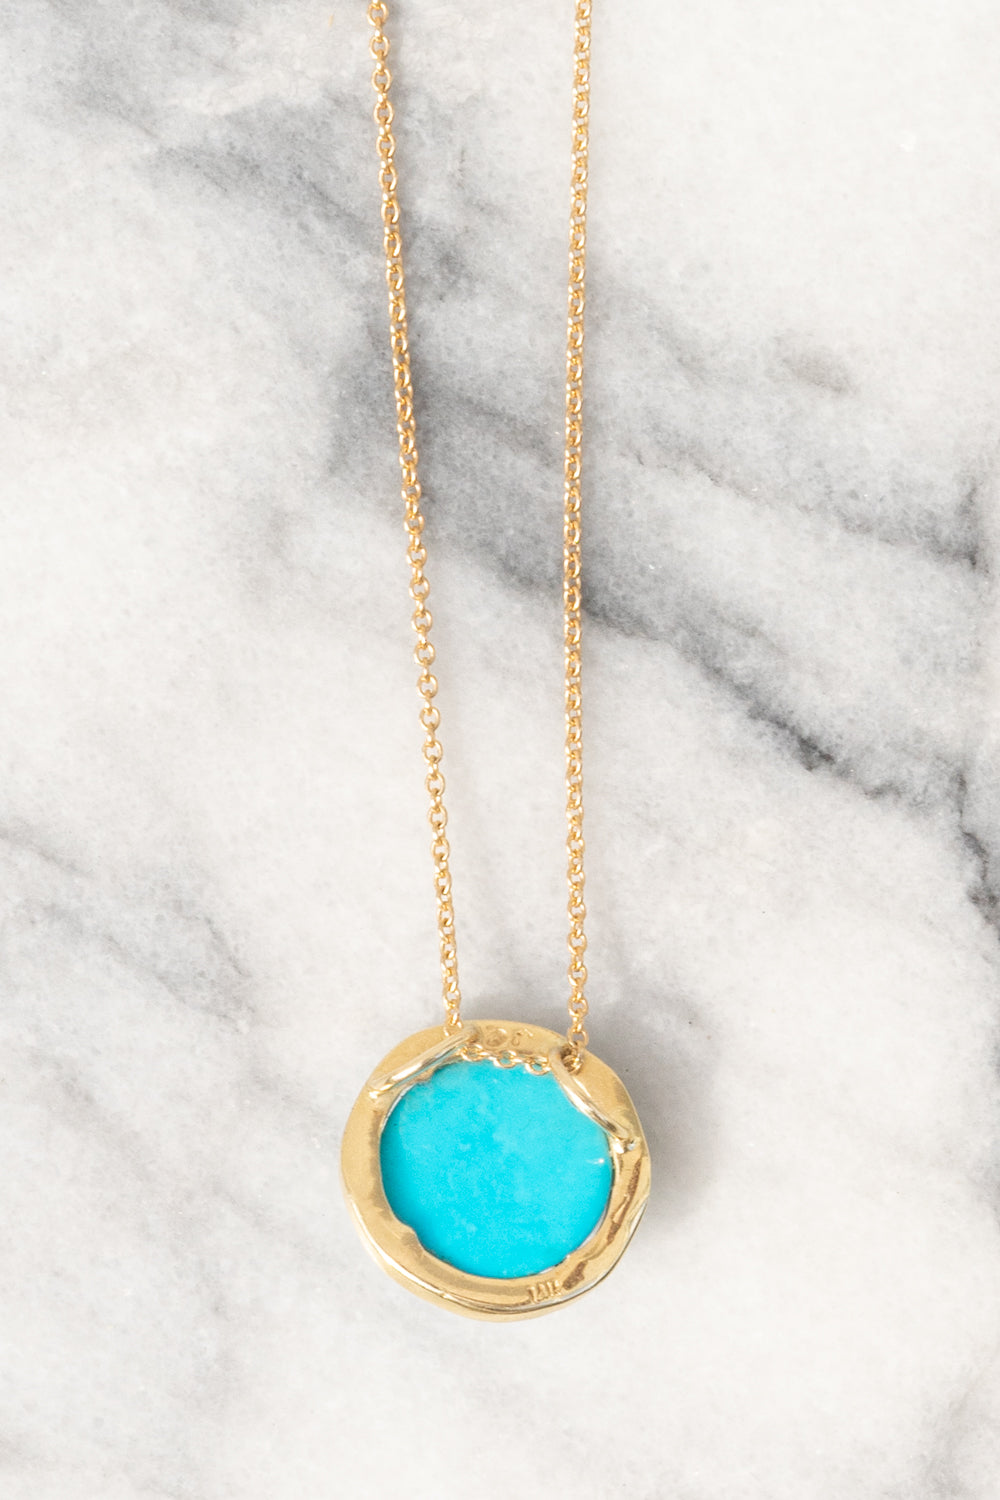 Auréole Cabochon Necklace | Sleeping Beauty Turquoise | 14K Gold